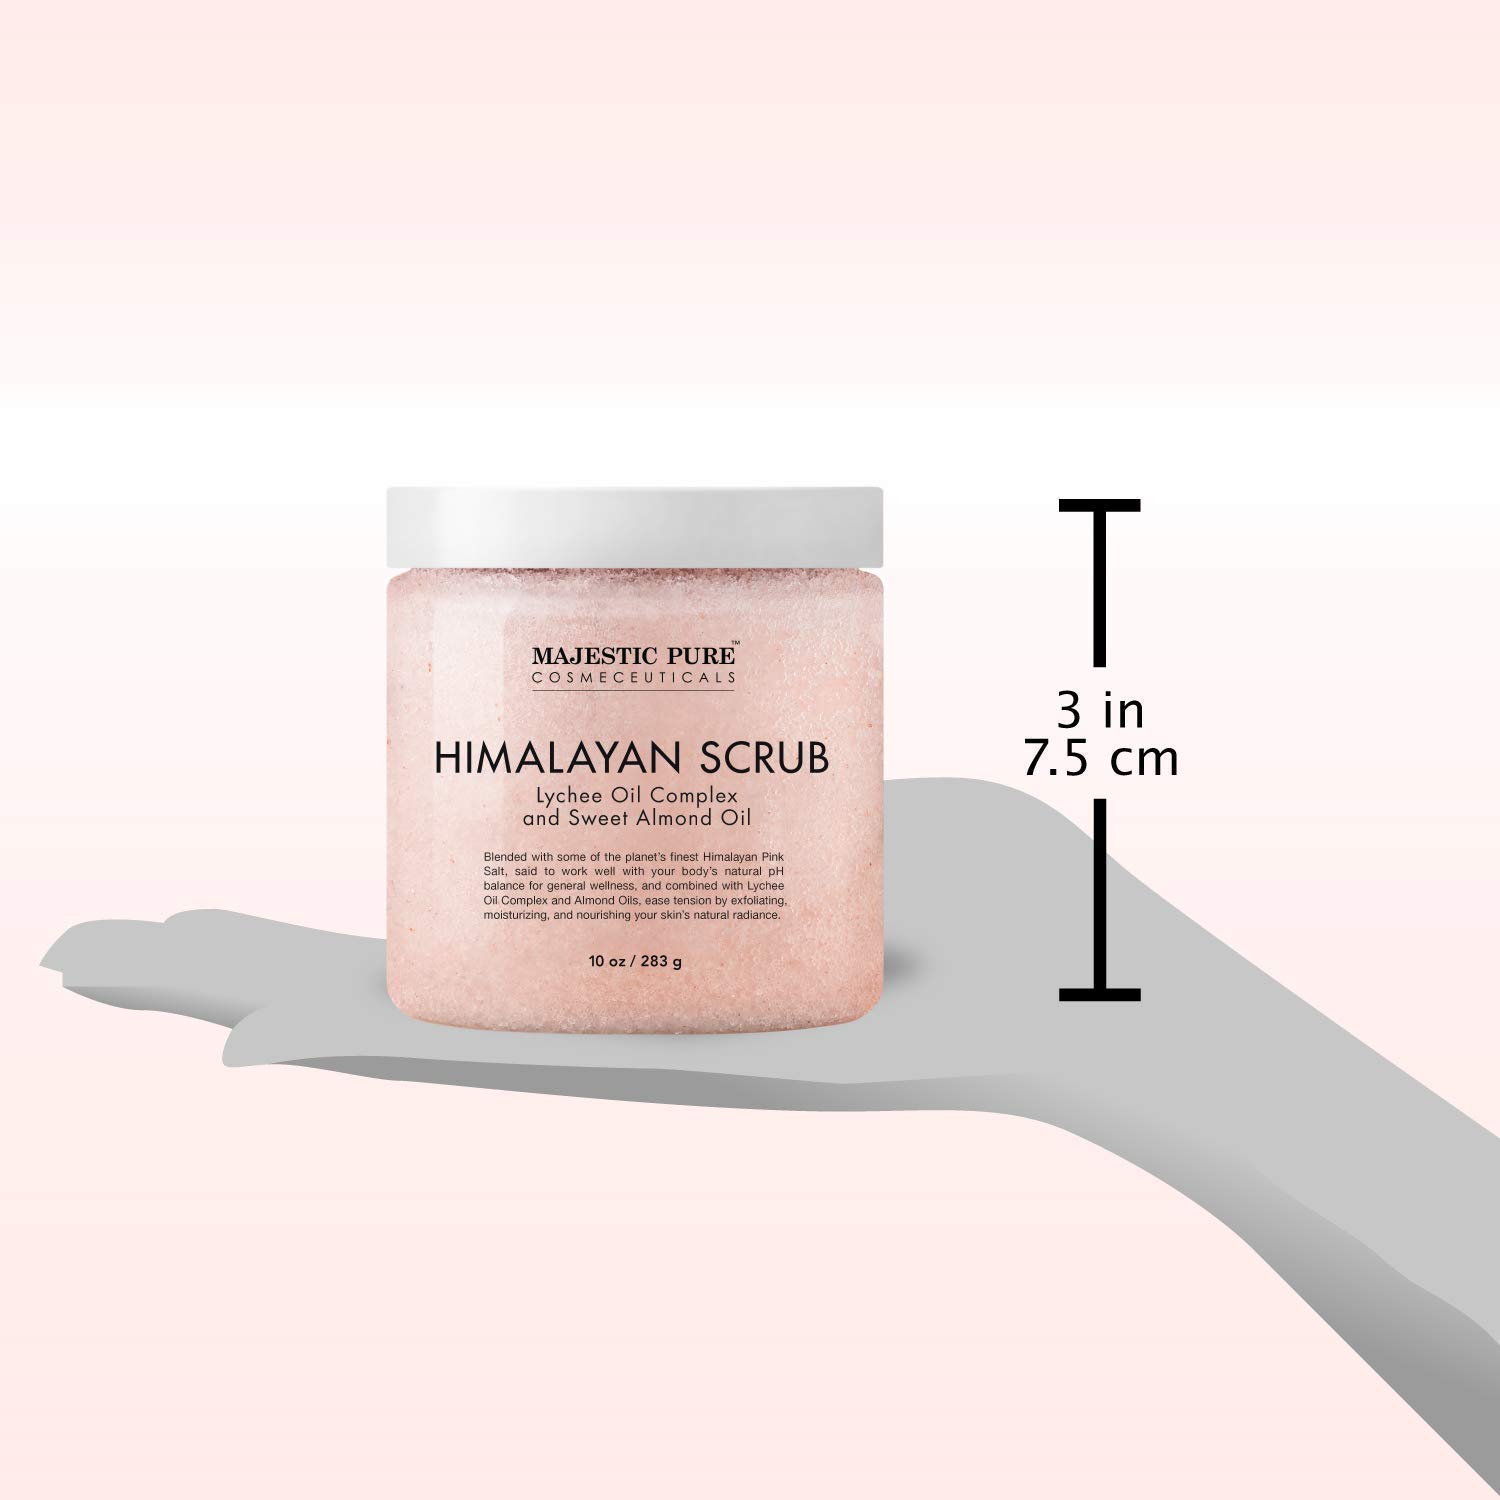 Majestic Pure Himalayan Salt Scrub and Matcha Scrub Bundle – Exfoliating Body Scrub Package